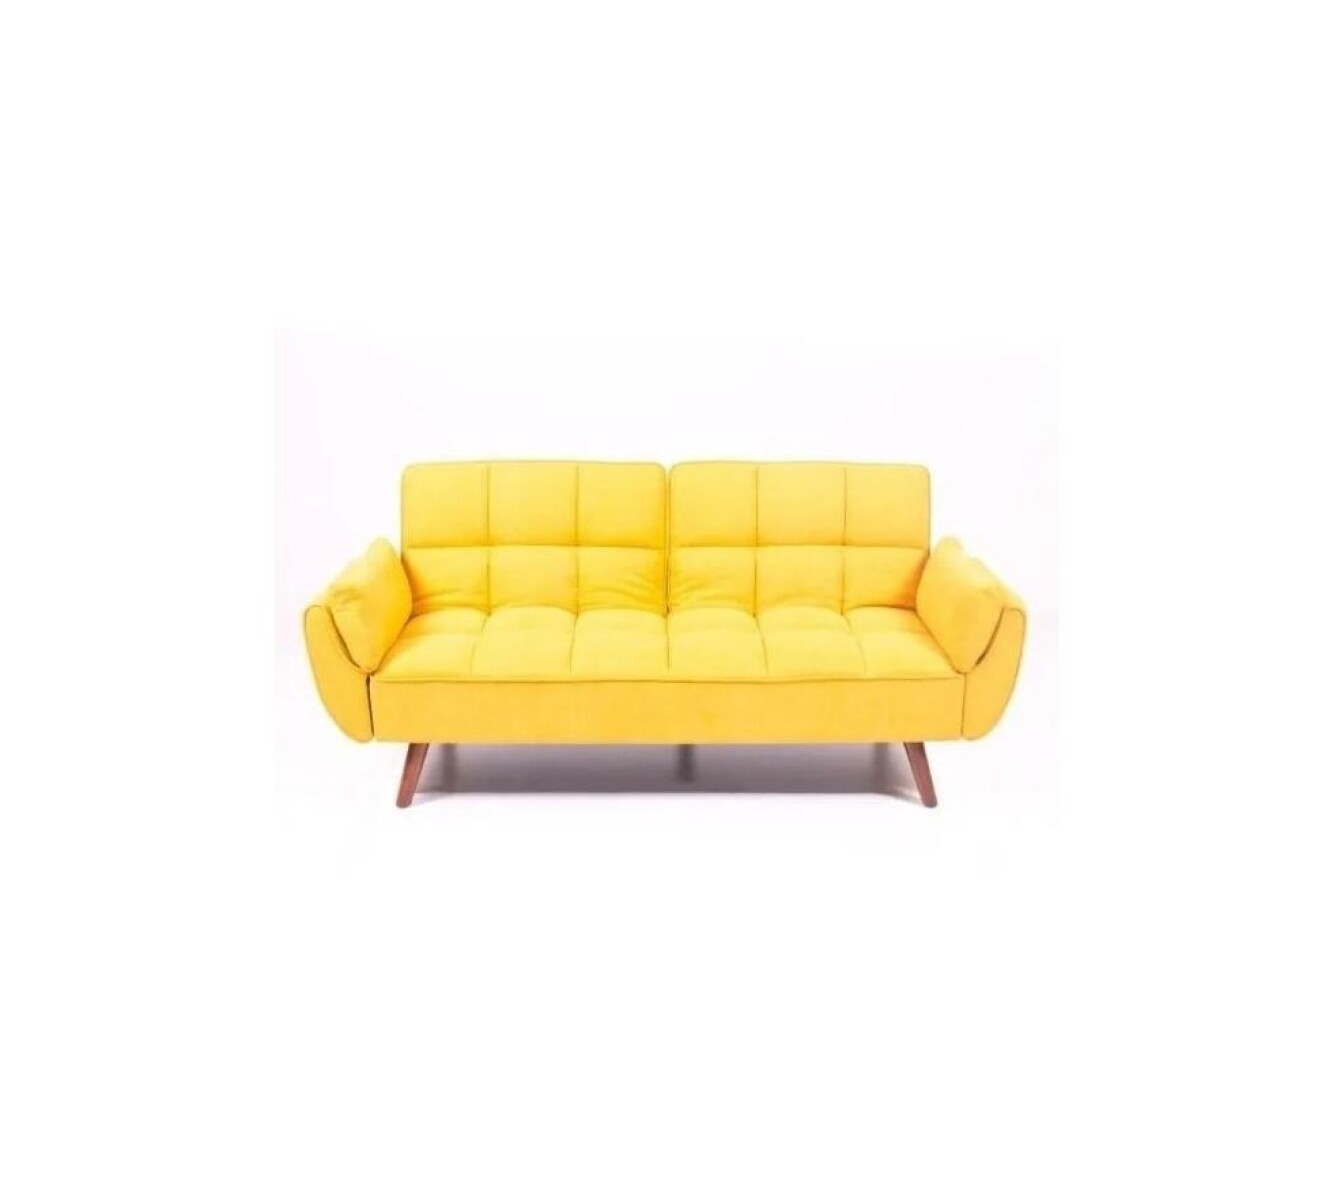 Sillon/Sofa cama - Frida - Amarillo 